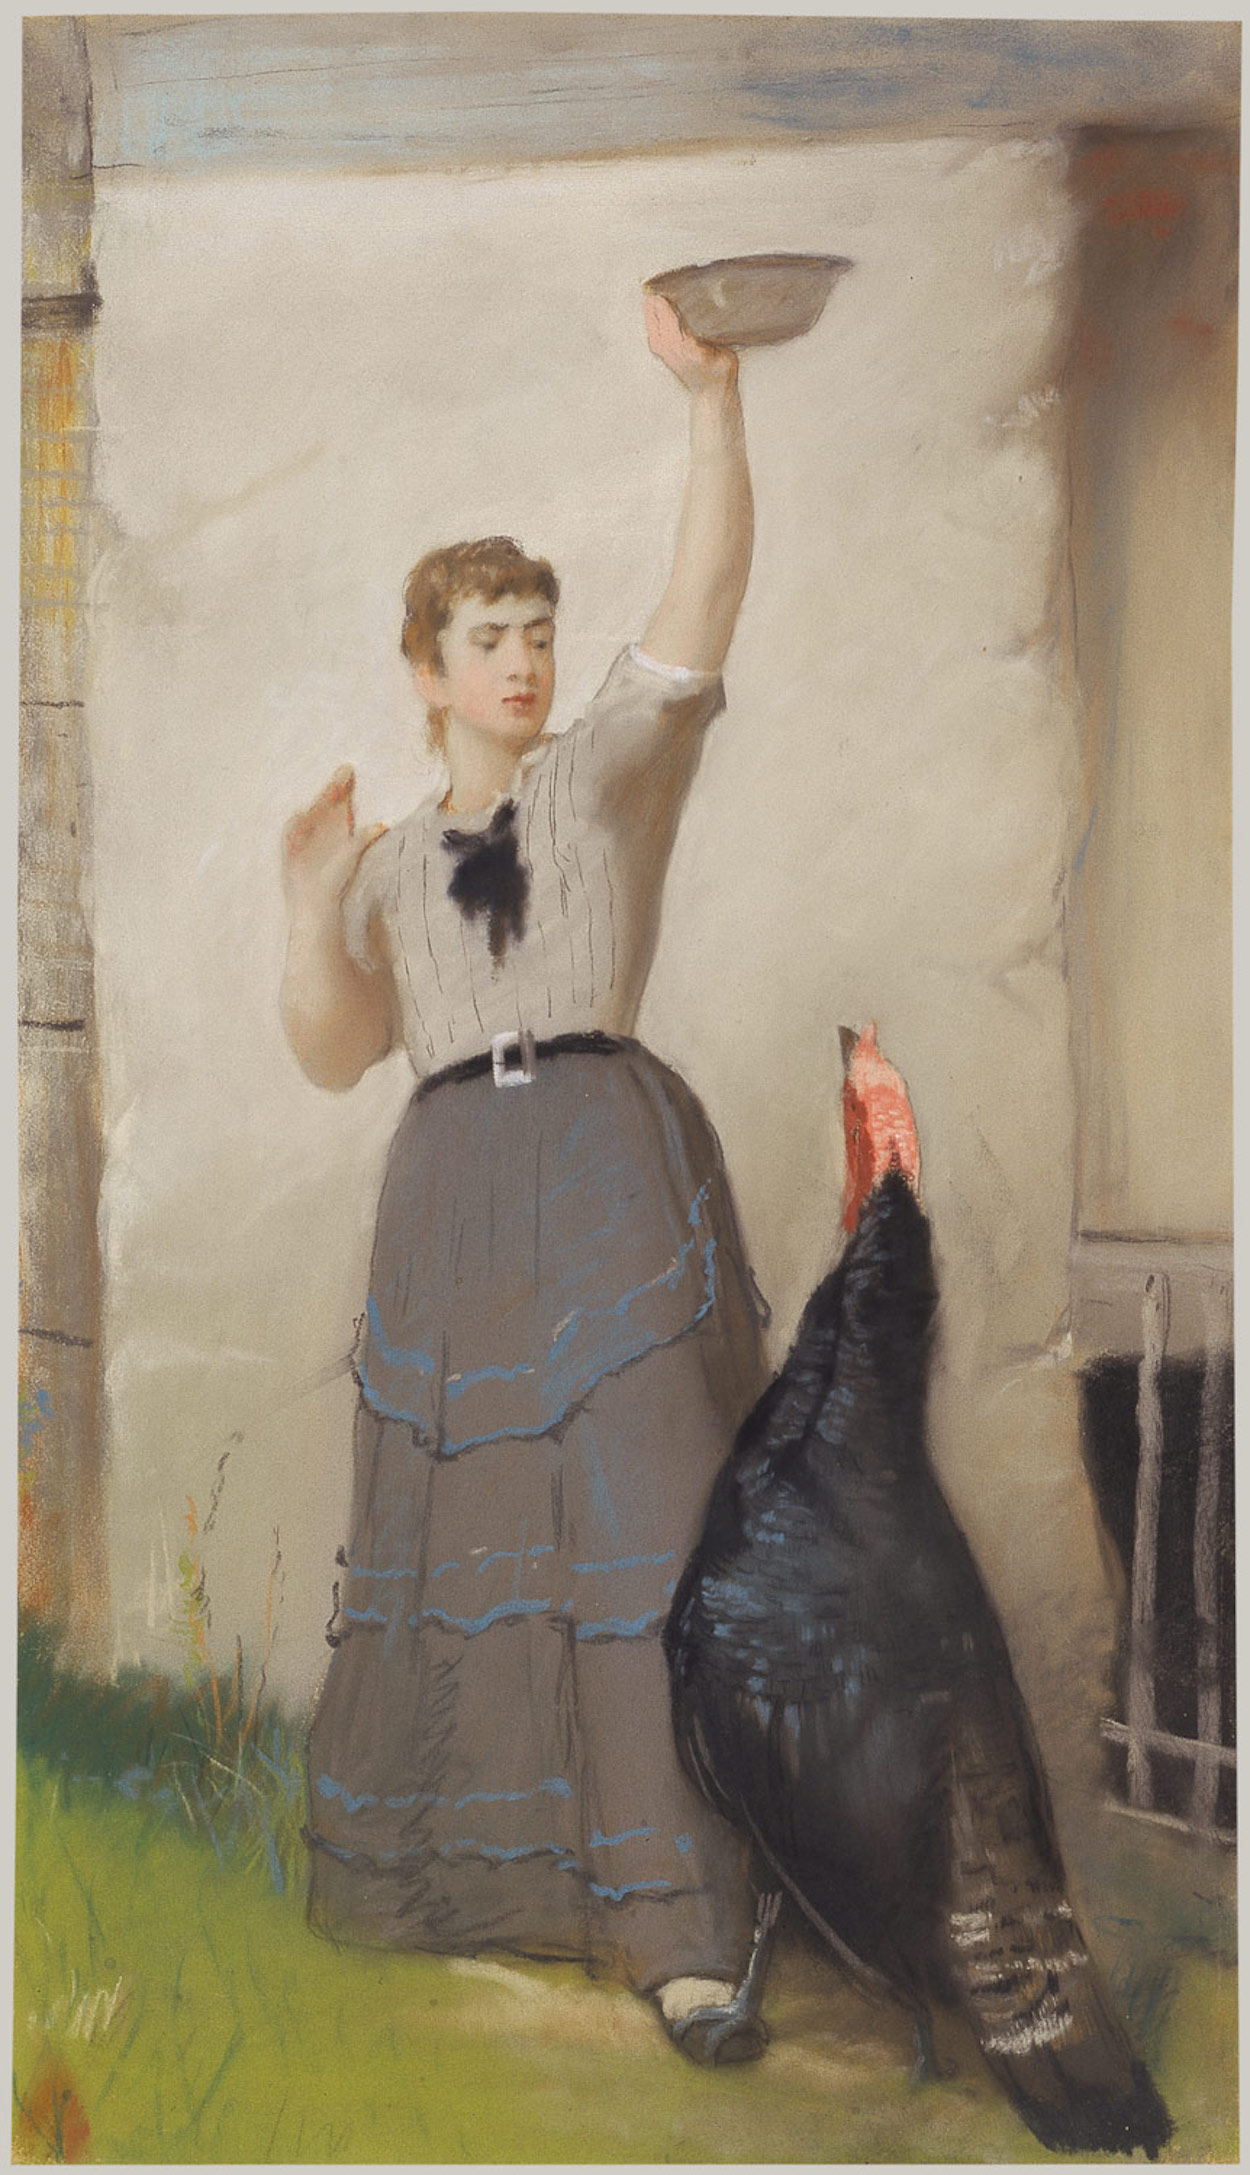 Feeding the Turkey by Eastman Johnson - ca. 1872–80 - 24 x 14 in. Metropolitan Museum of Art